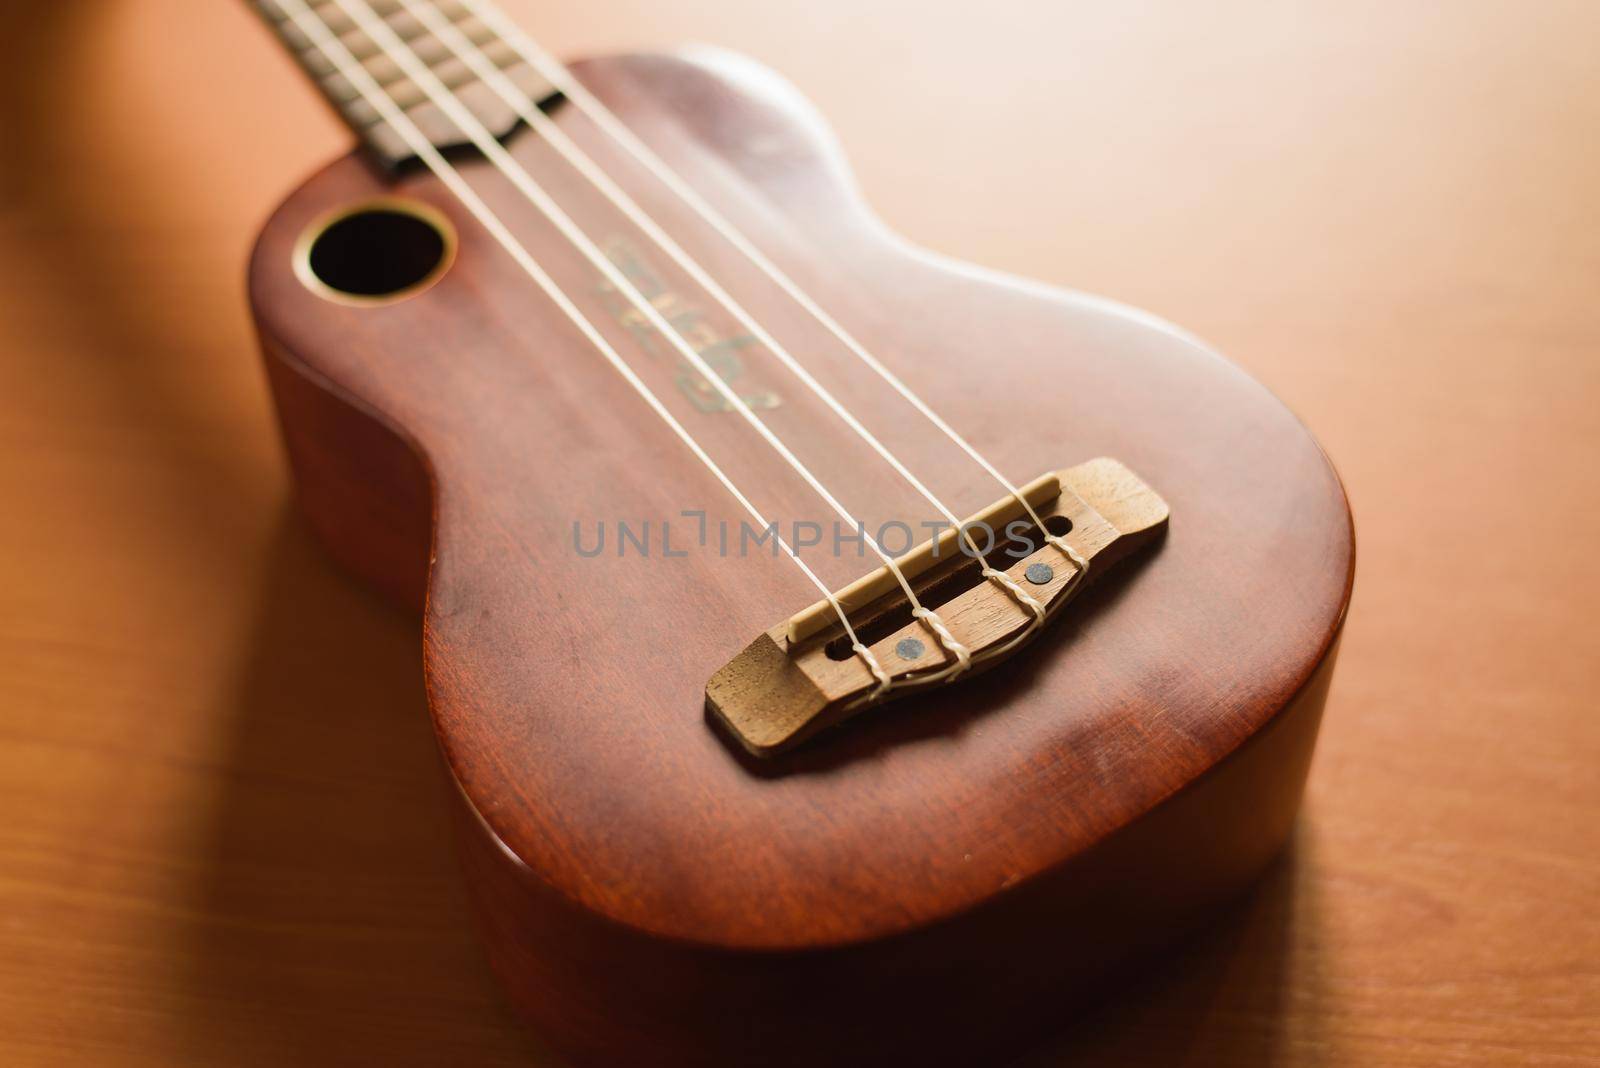 Vintage ukulele on wooden table